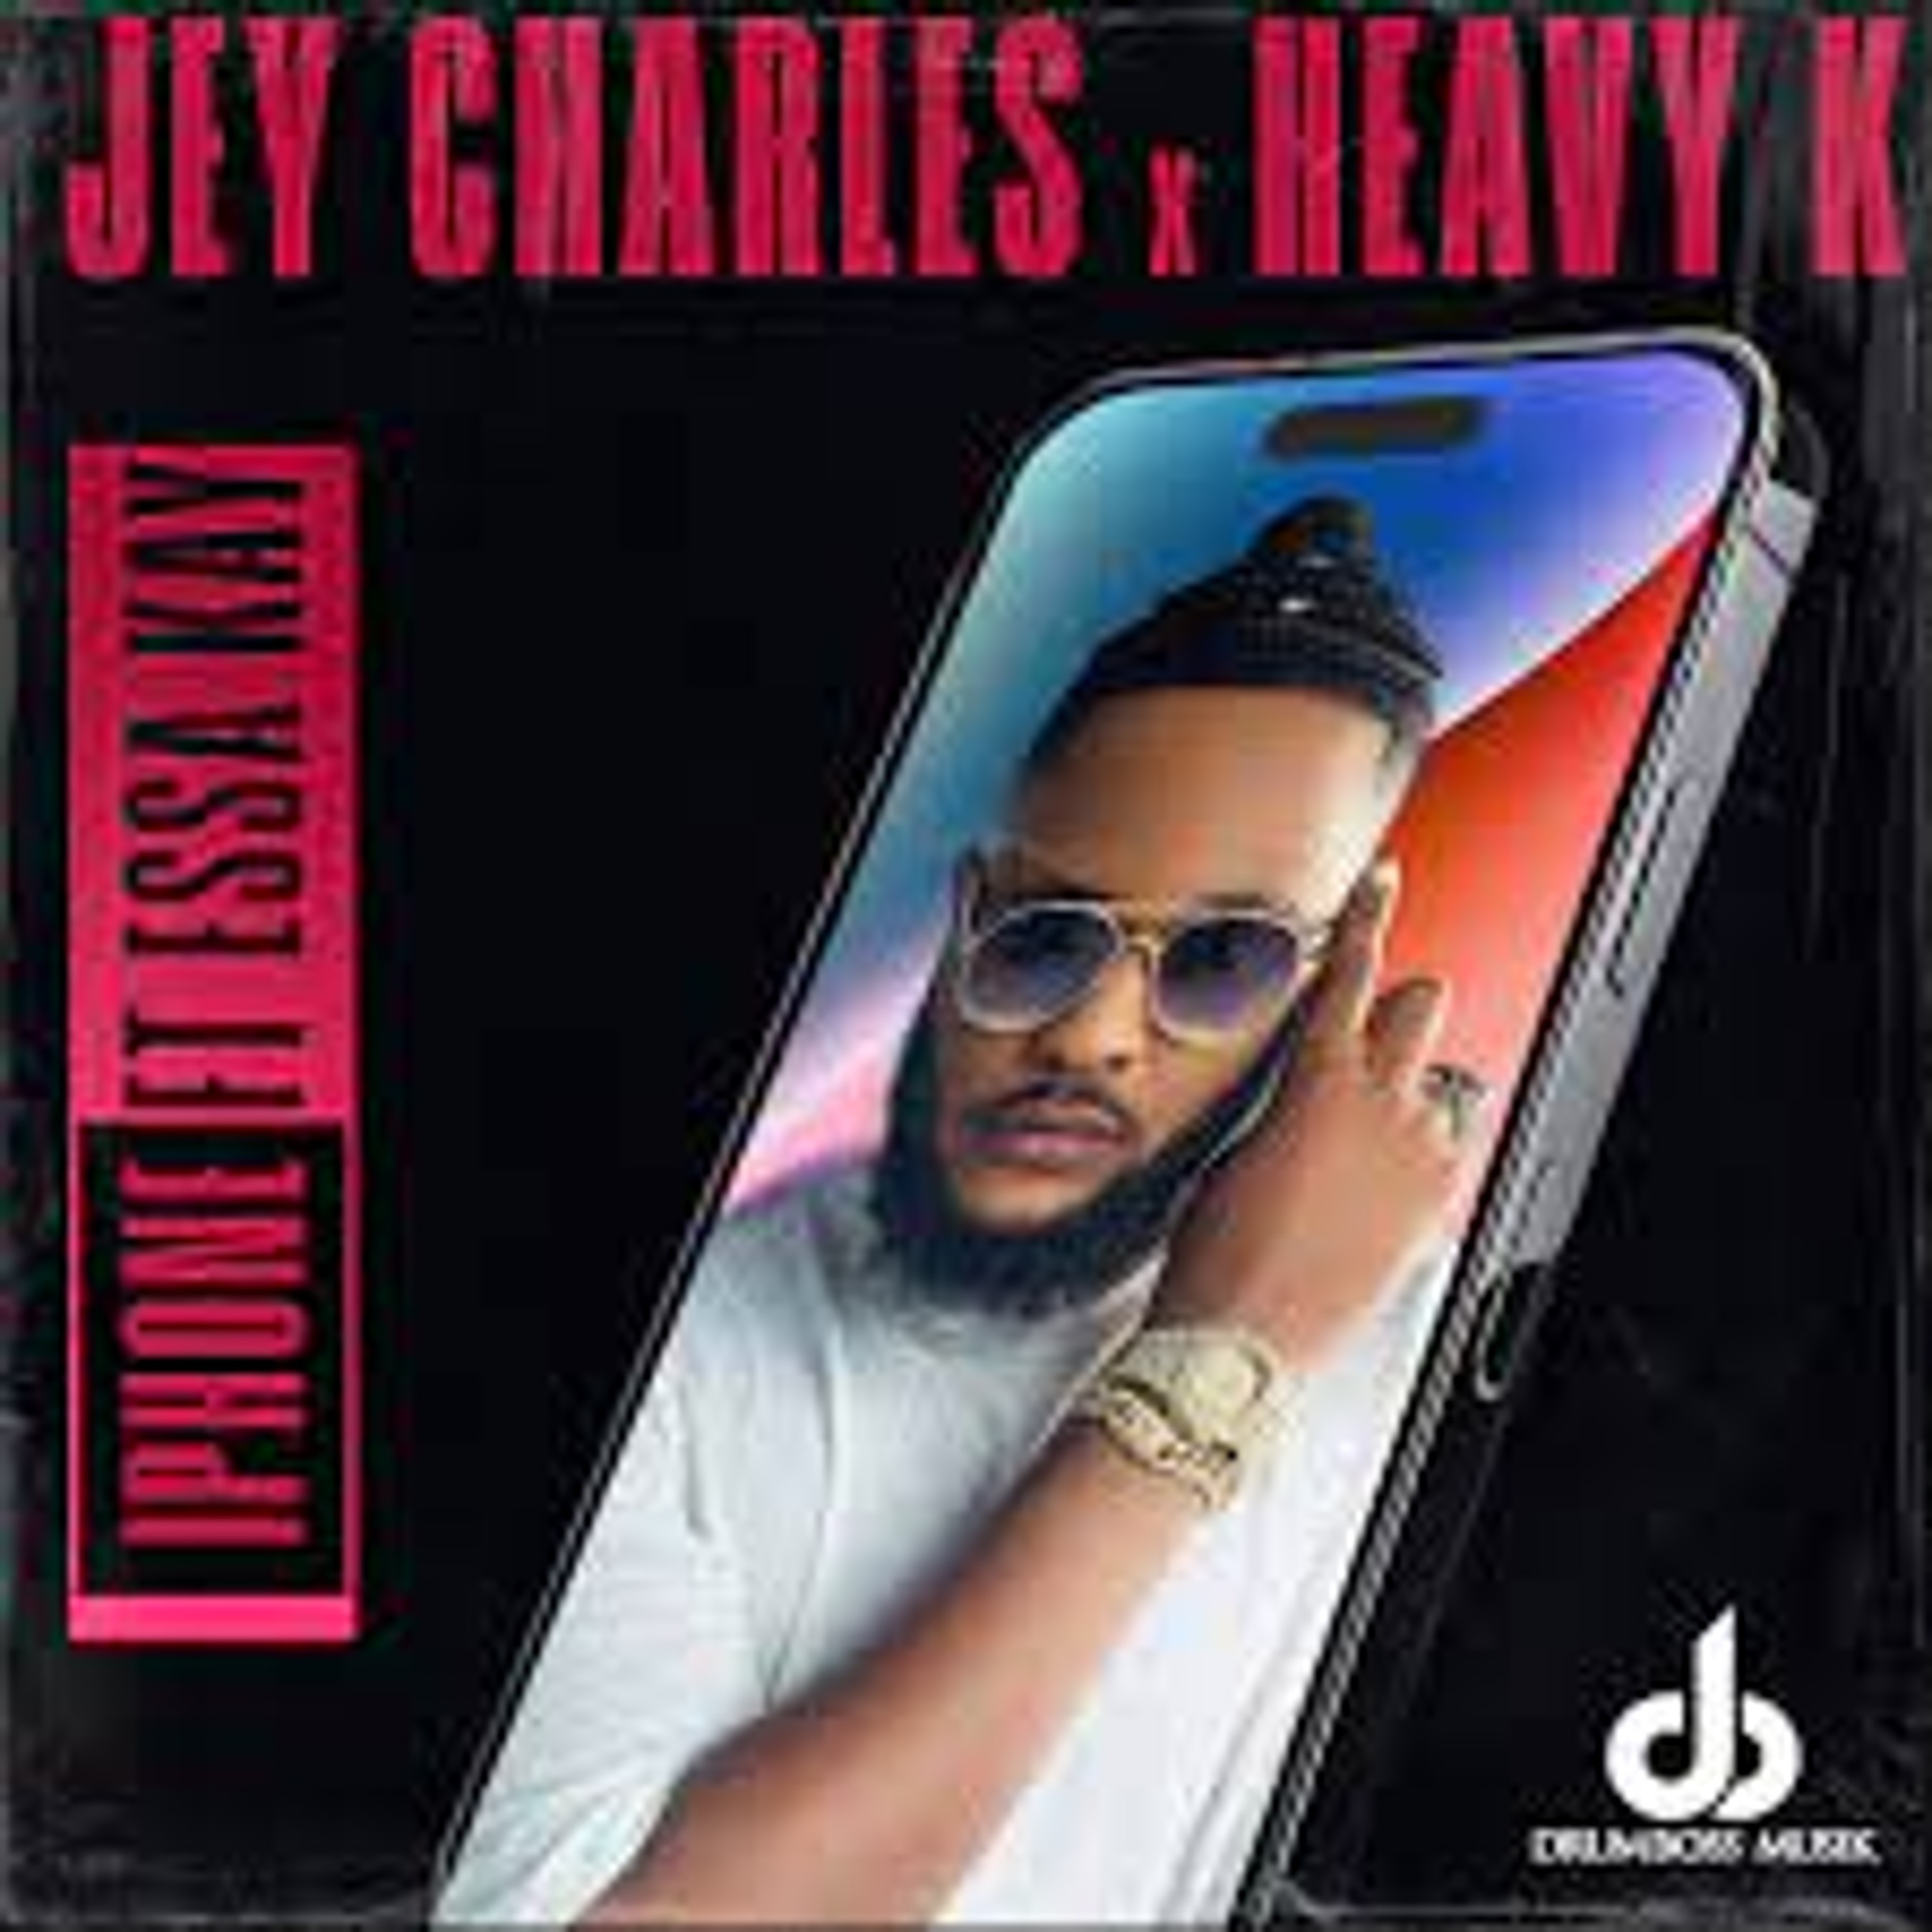 Jey Charles – iPhone Ft Heavy-K & Essa Kay Mp3 Download Fakaza: J